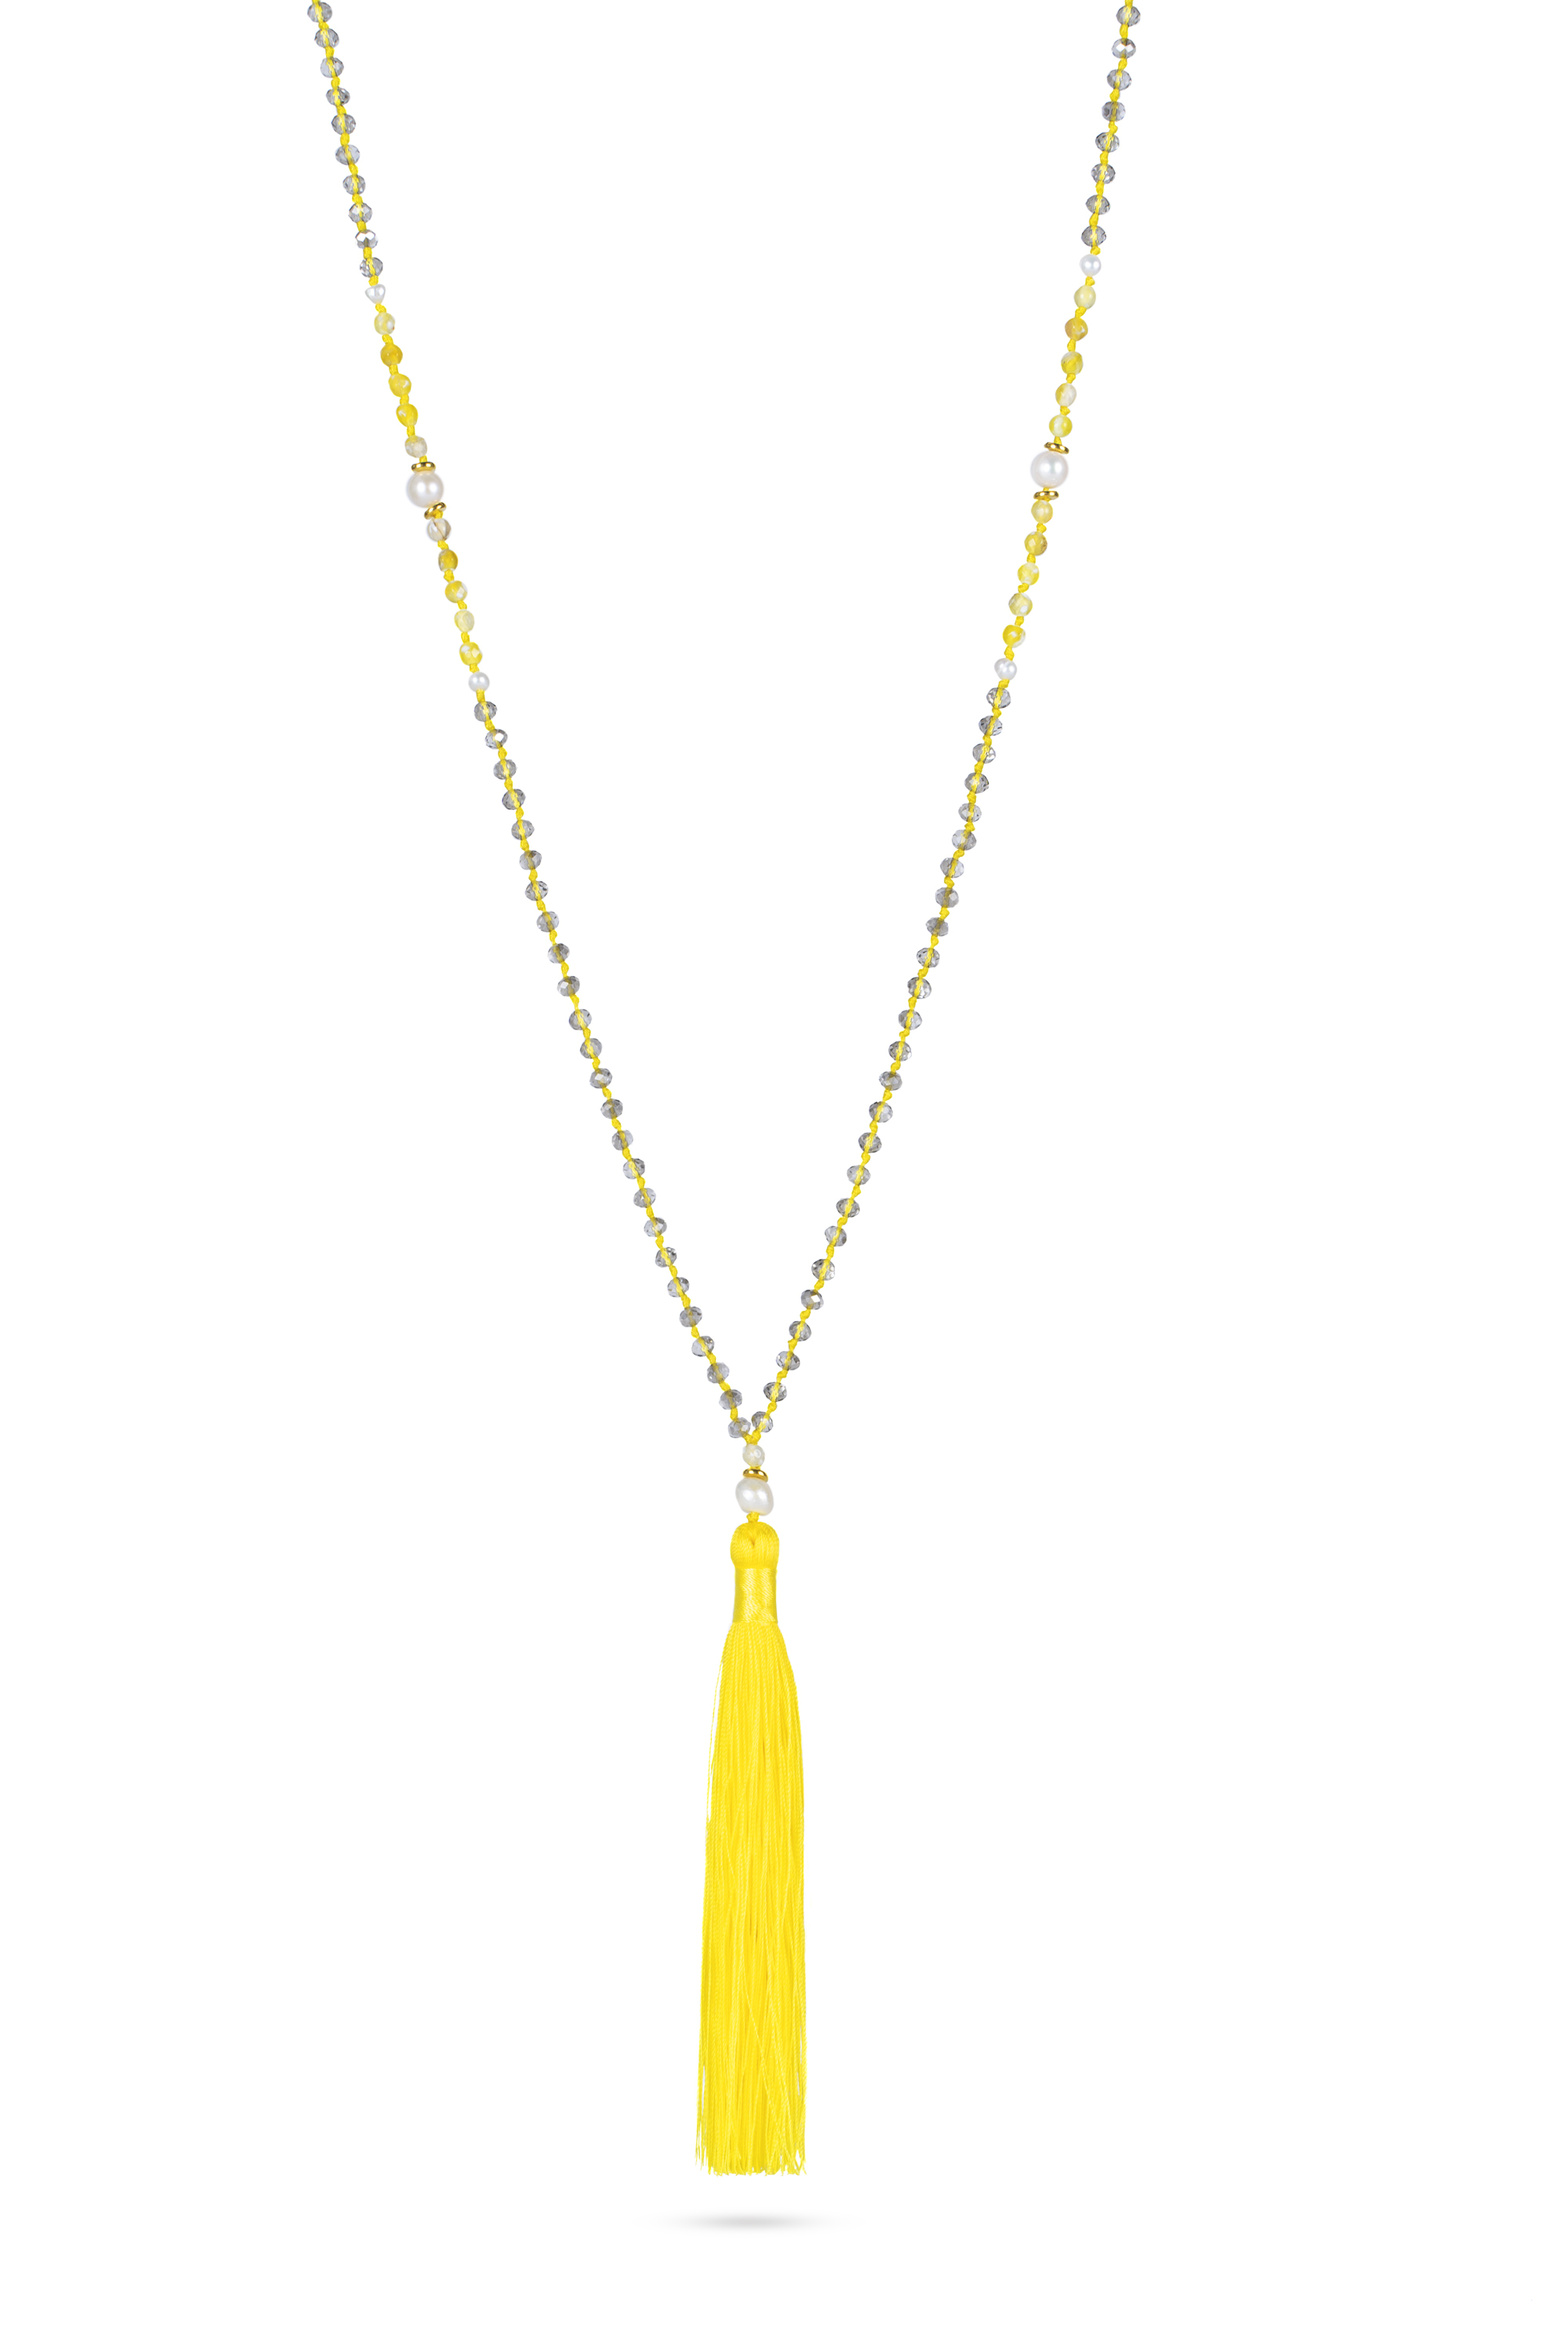 n2000_tassel_necklace_yellow_zing_b.jpg